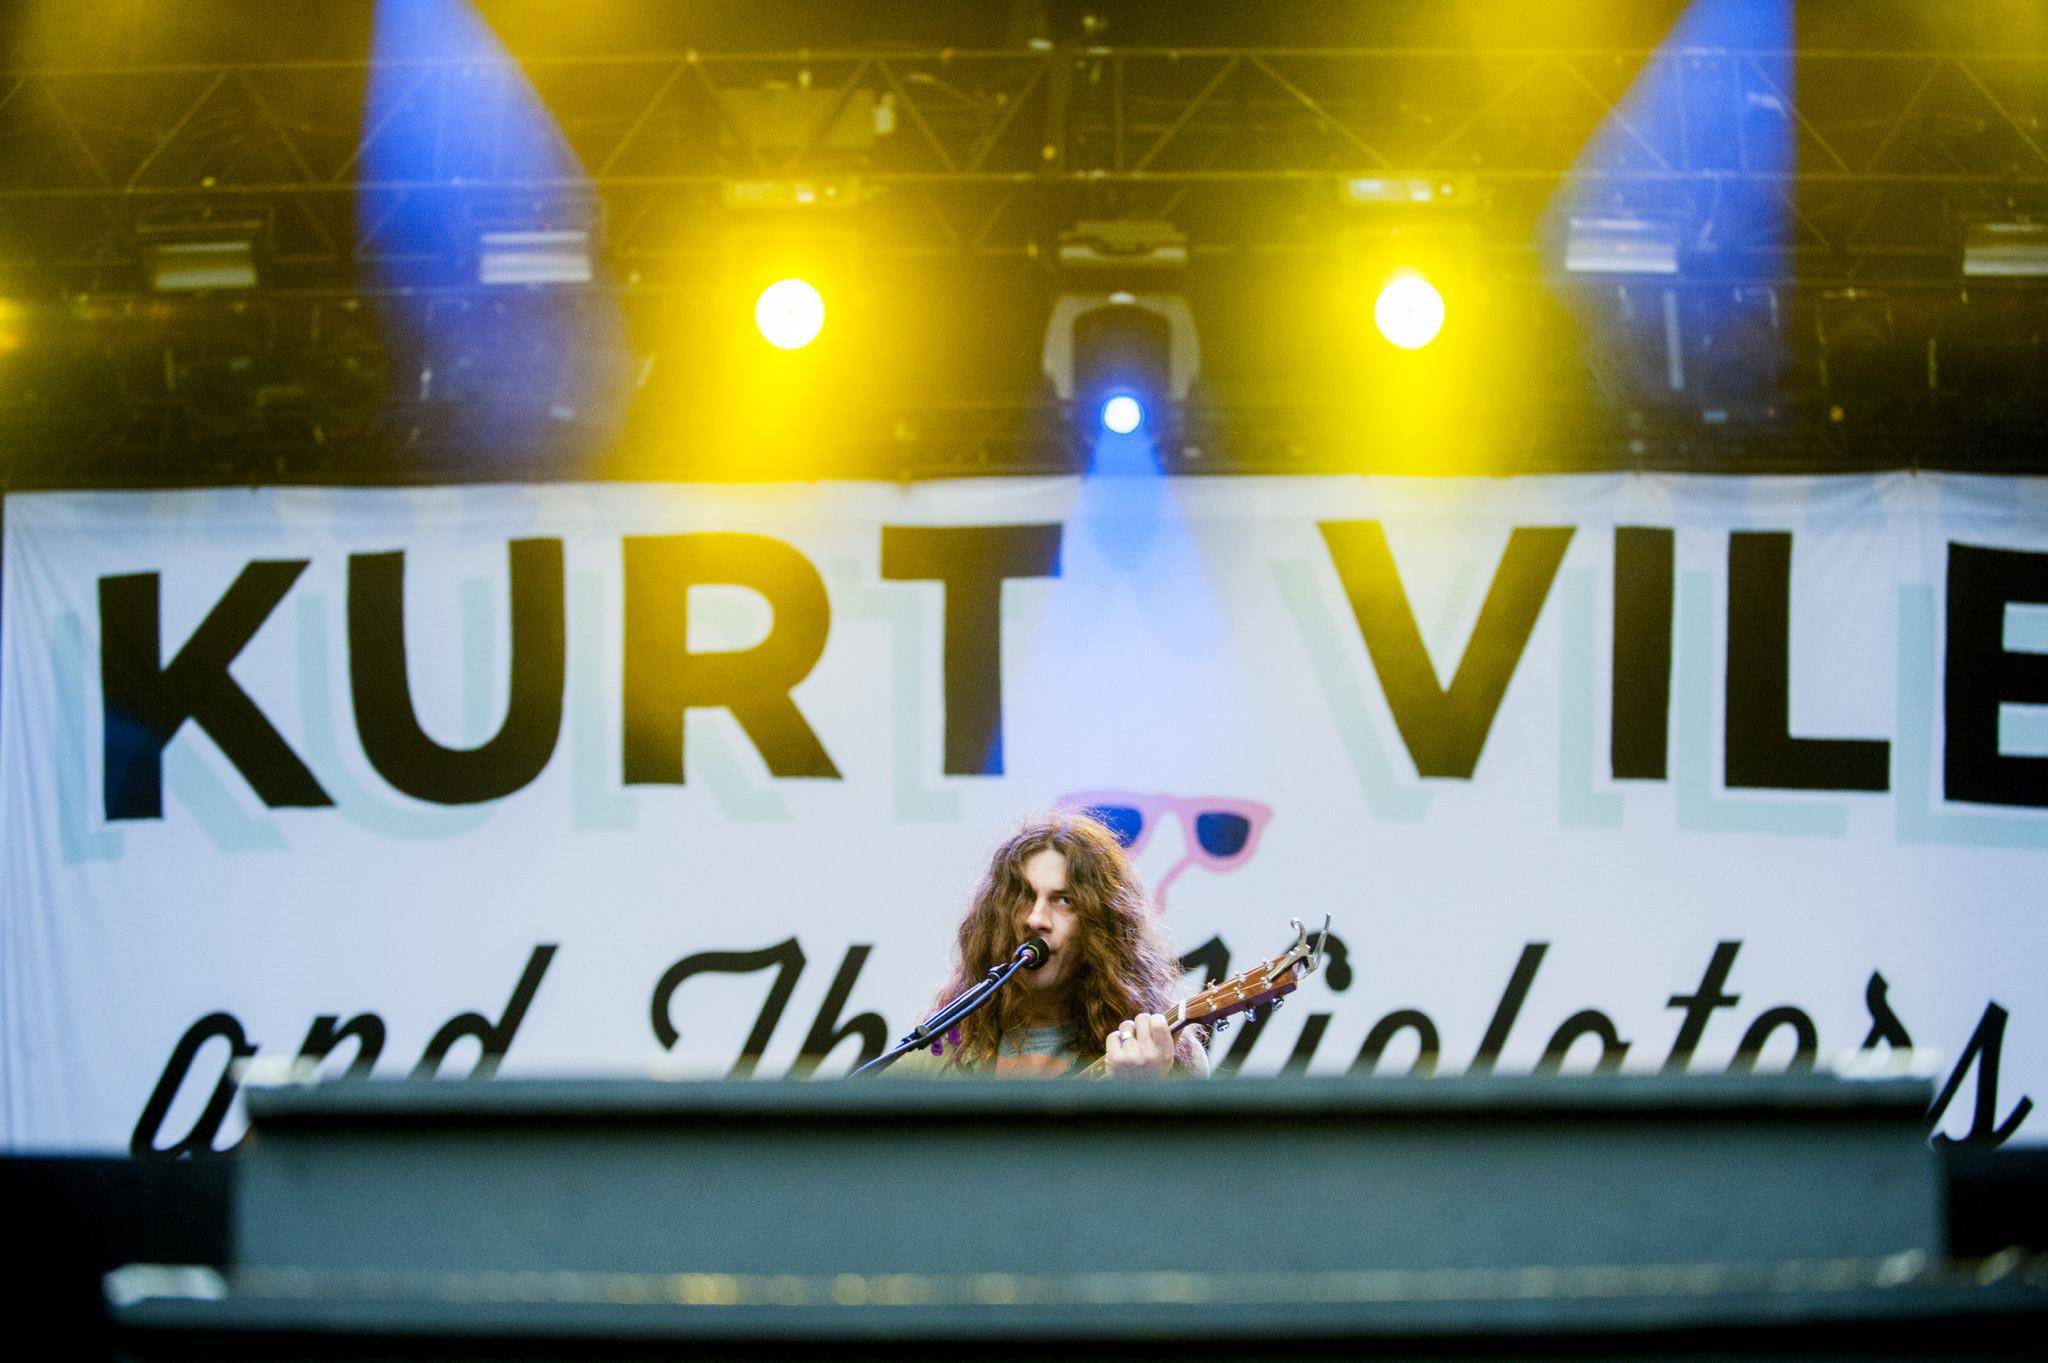 Kurt Vile & The Violators